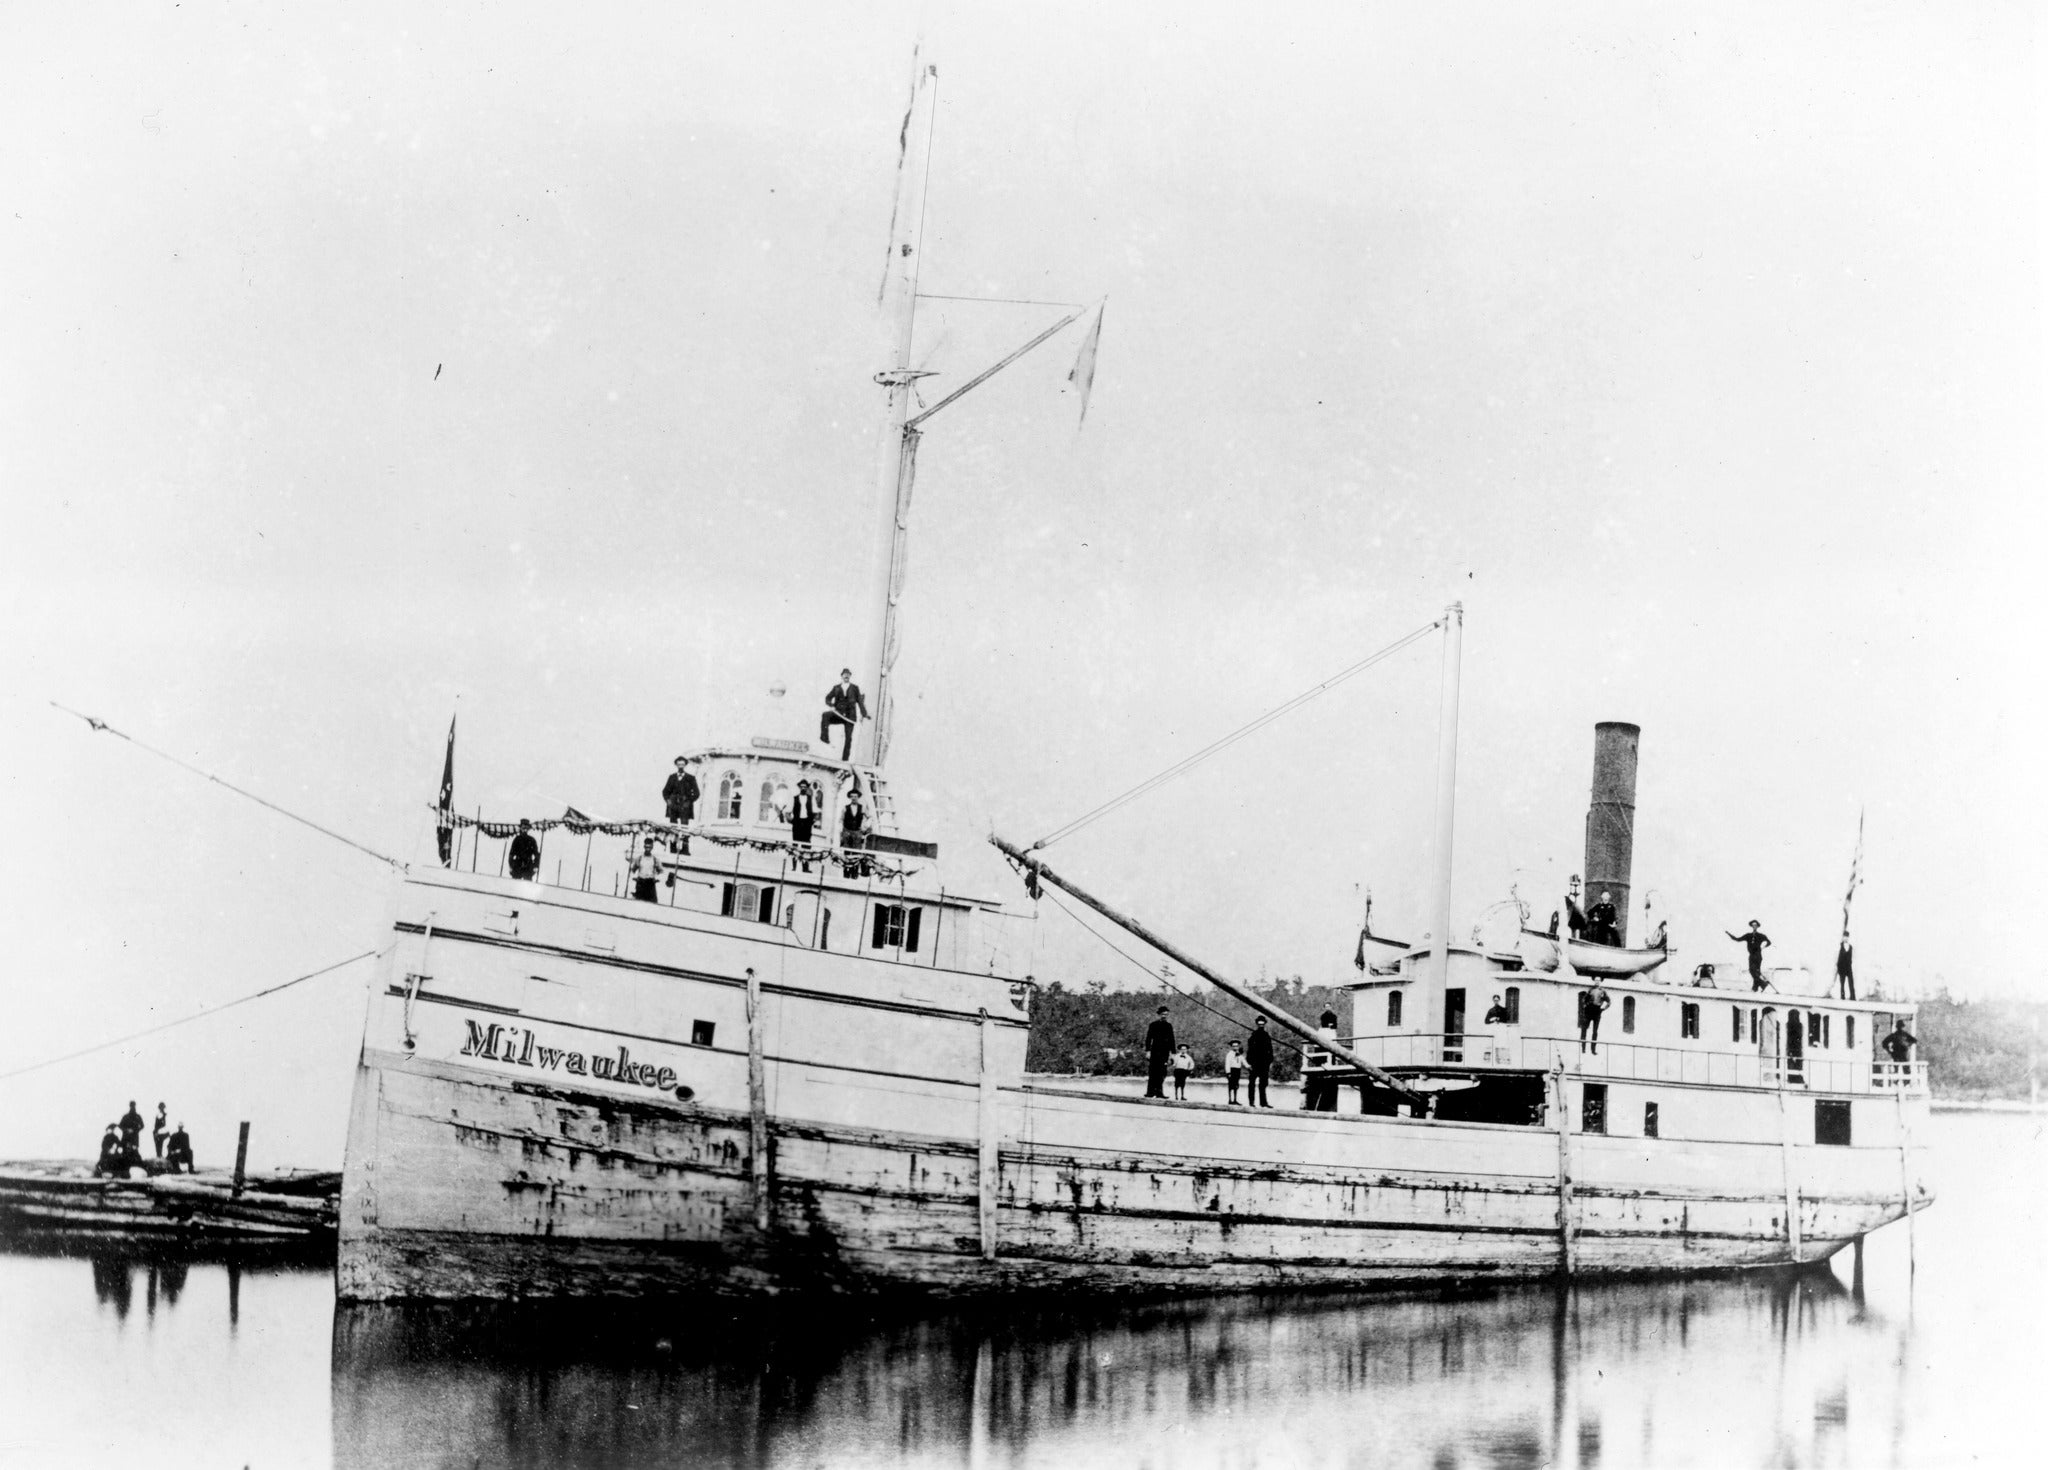 The Milwaukee steamship